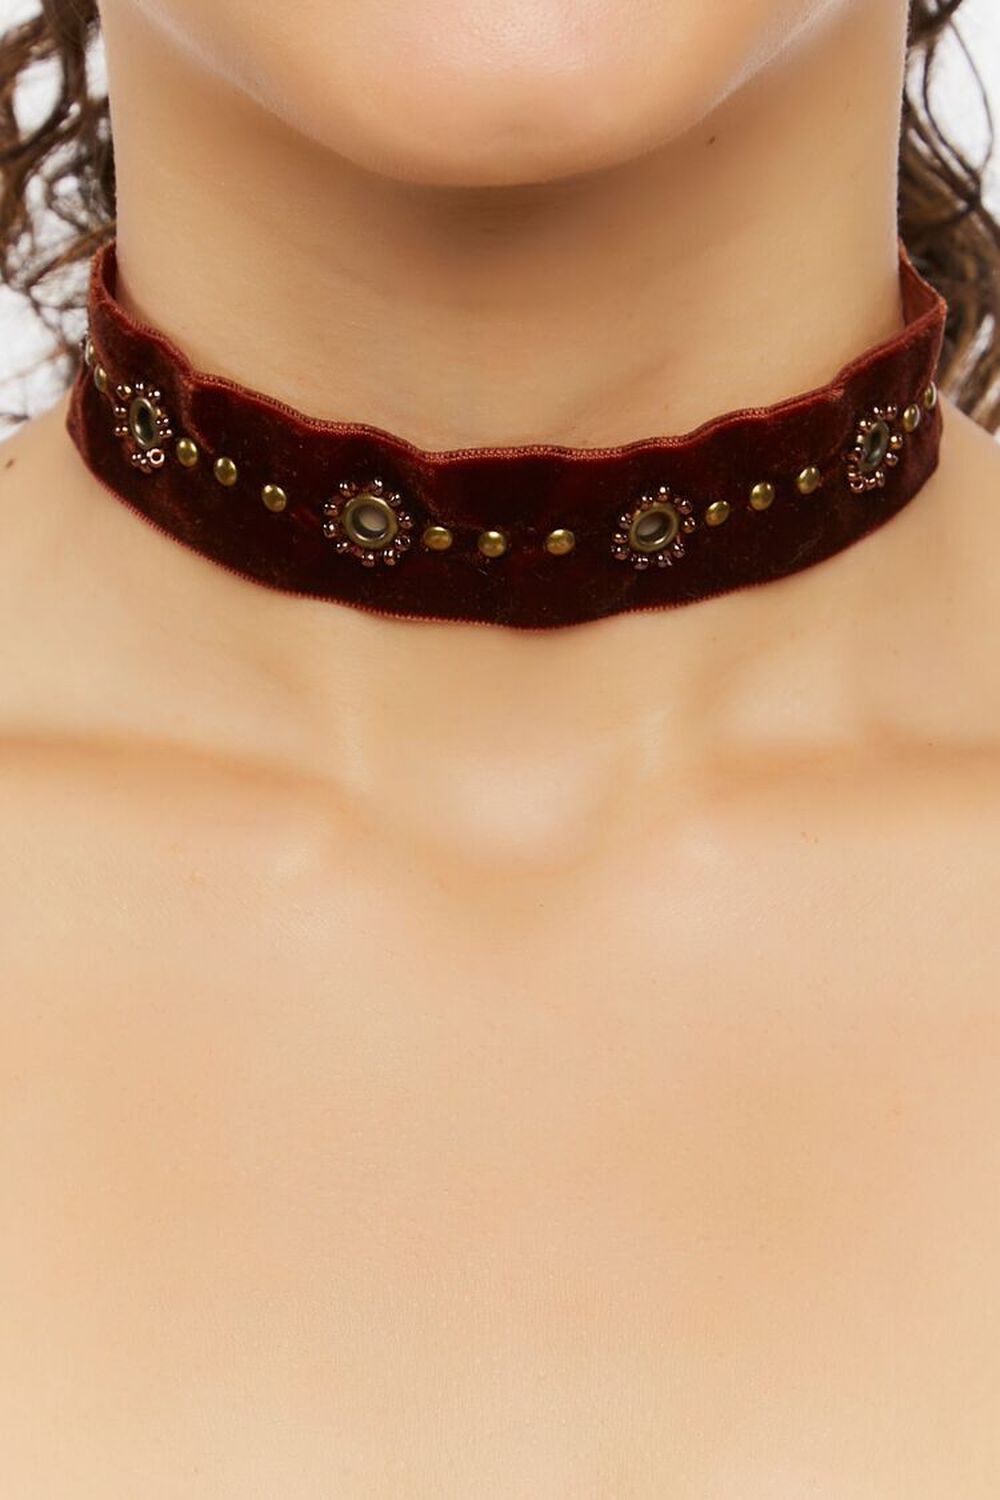 BROWN/GOLD Studded Velvet Choker Necklace, image 1